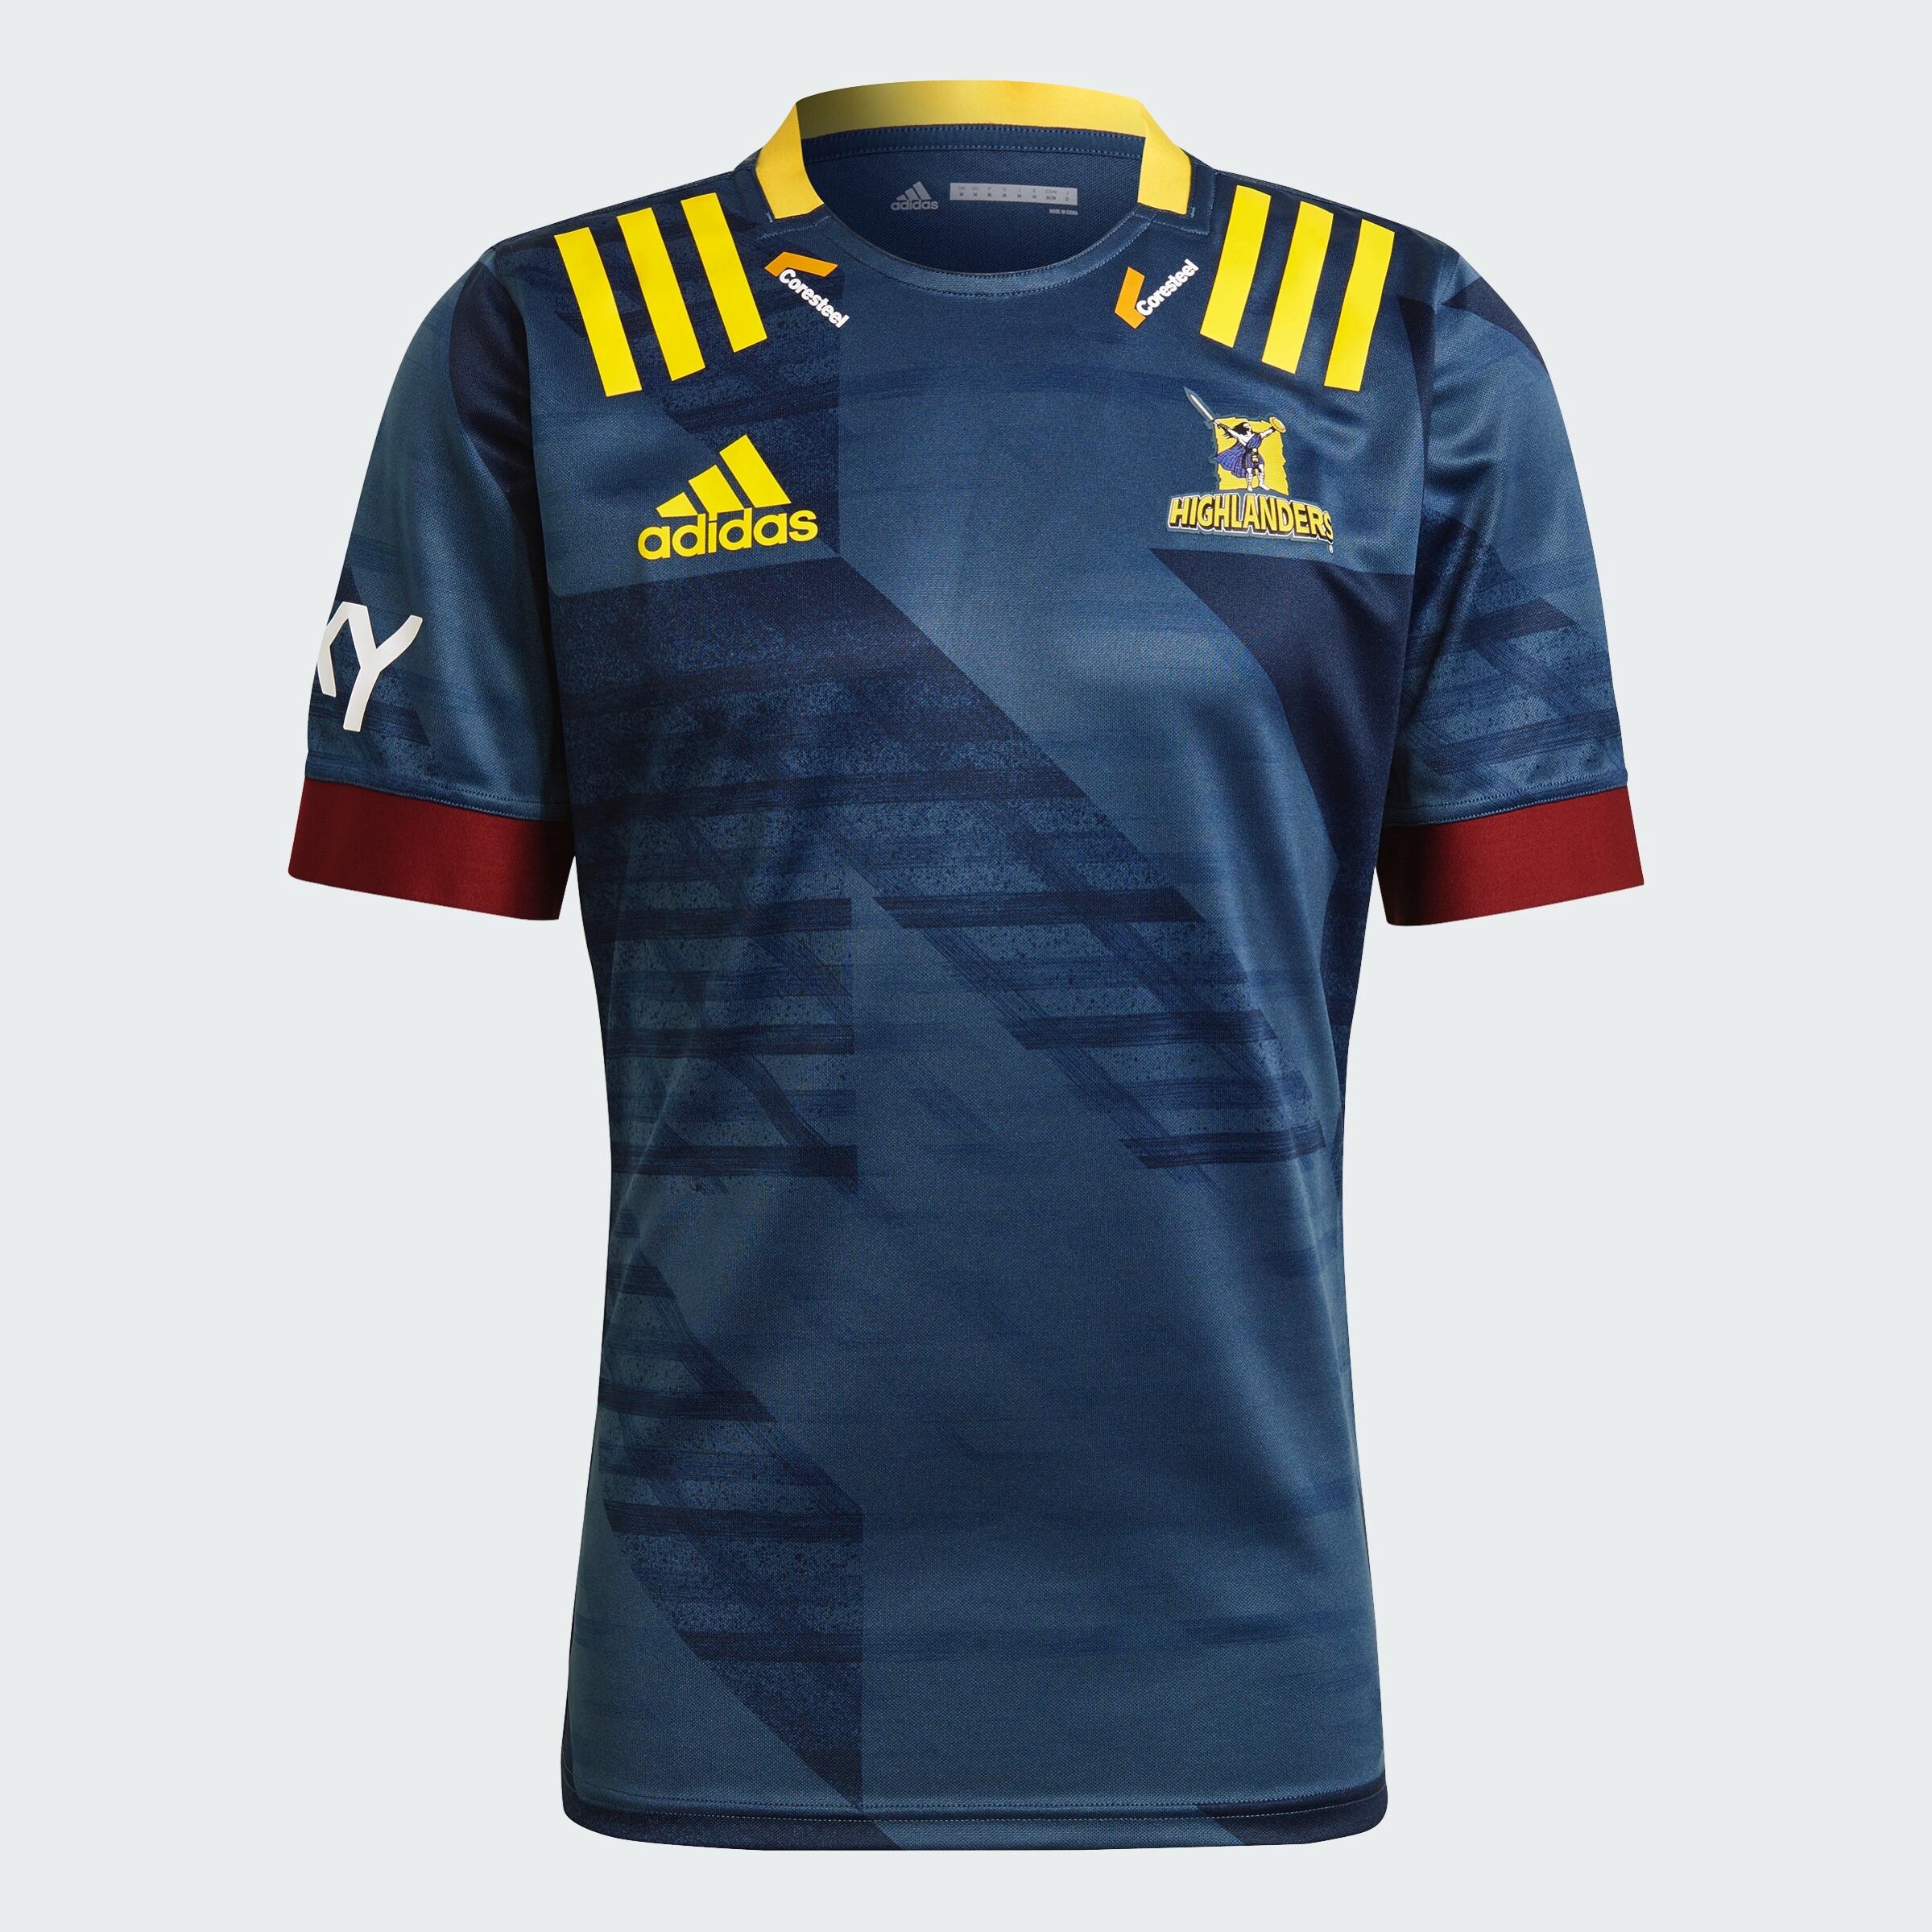 adidas Highlanders Mens Home Rugby Shirt GT7547 Blue 1/1